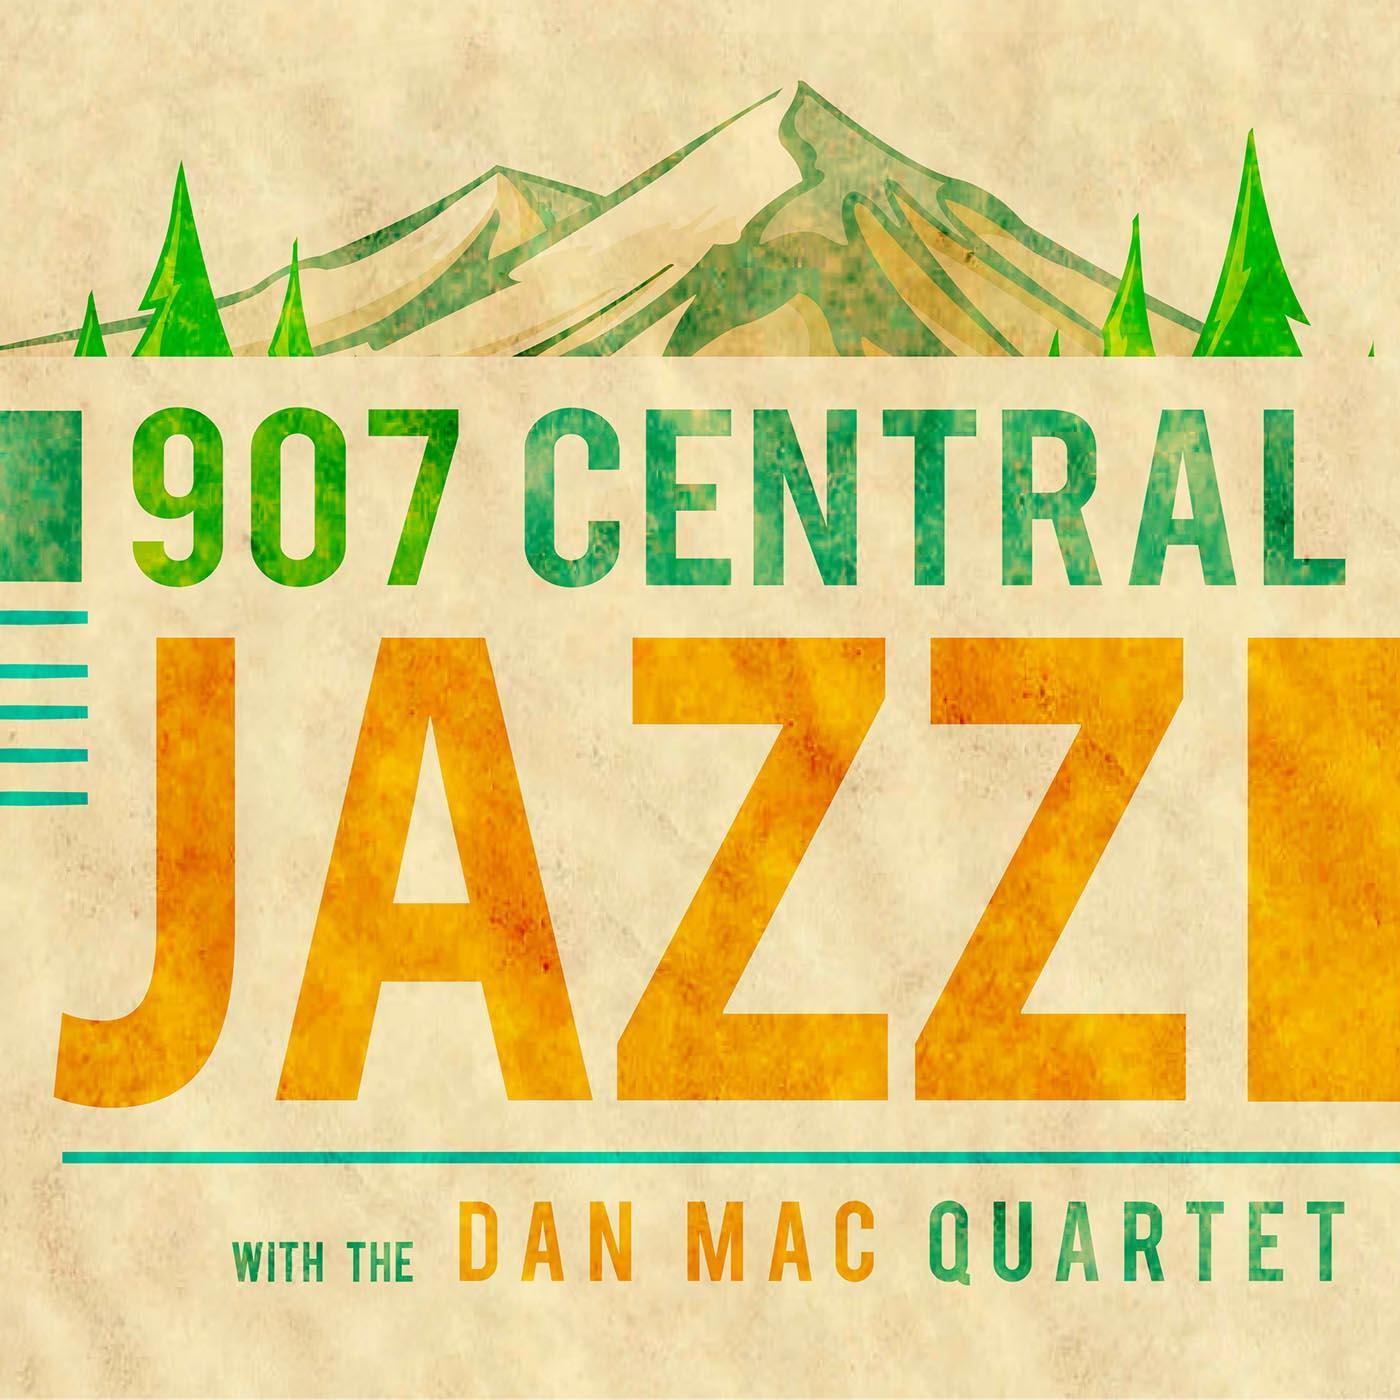 907 Central Jazz